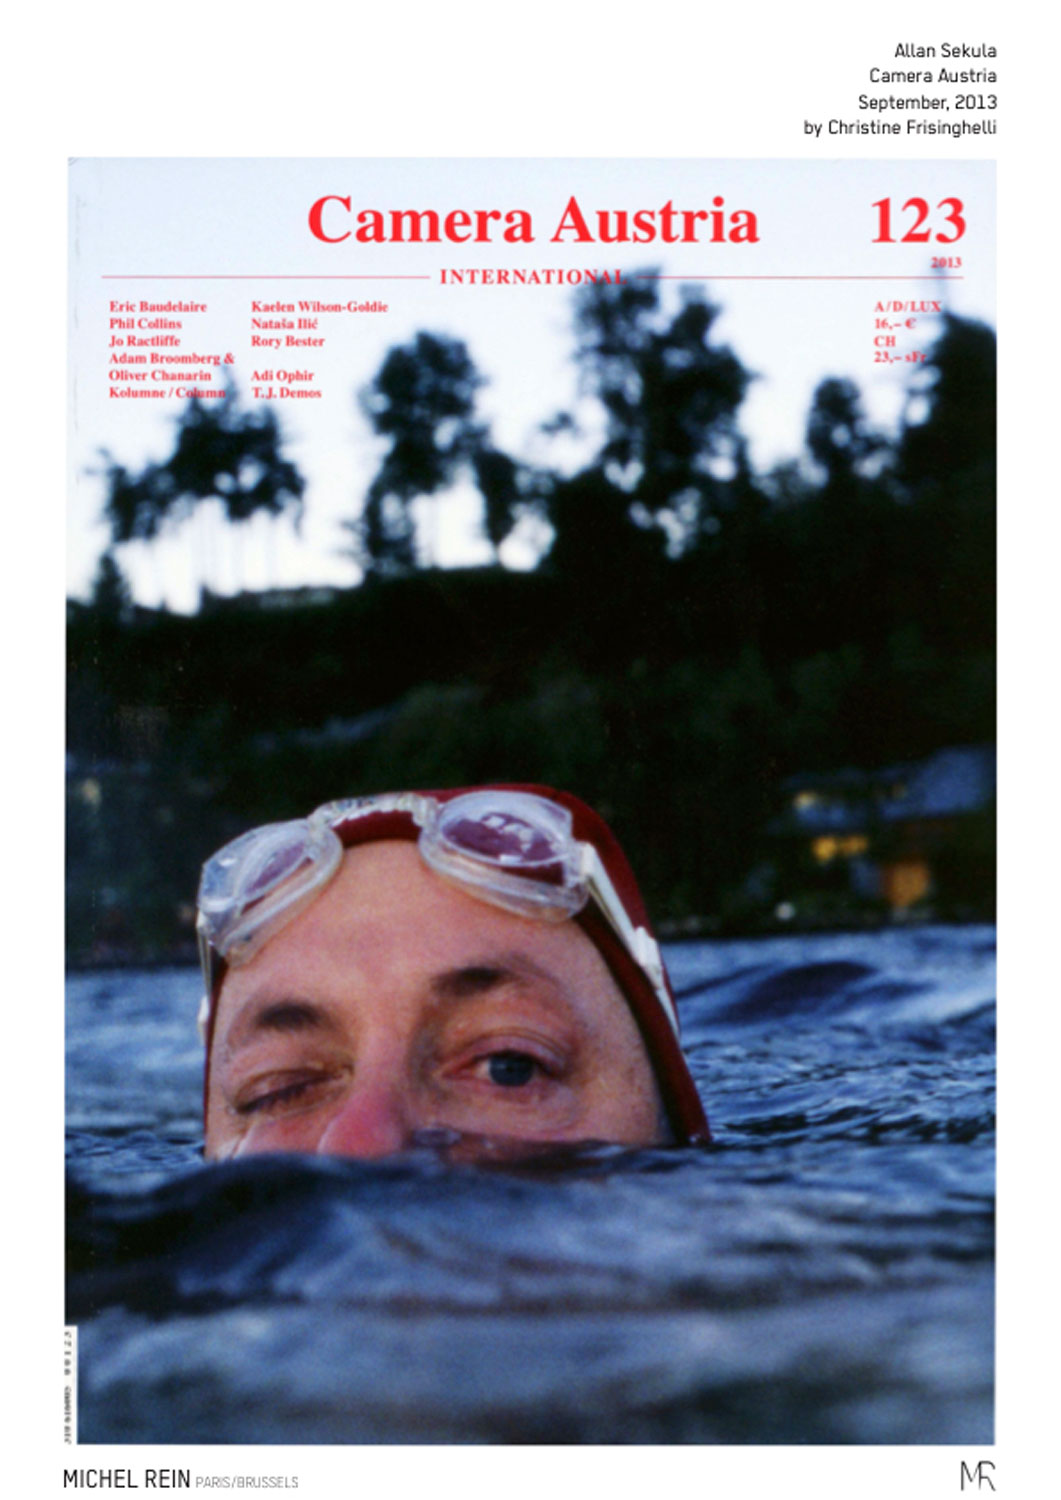 Allan Sekula 1951-2013 - Camera Austria